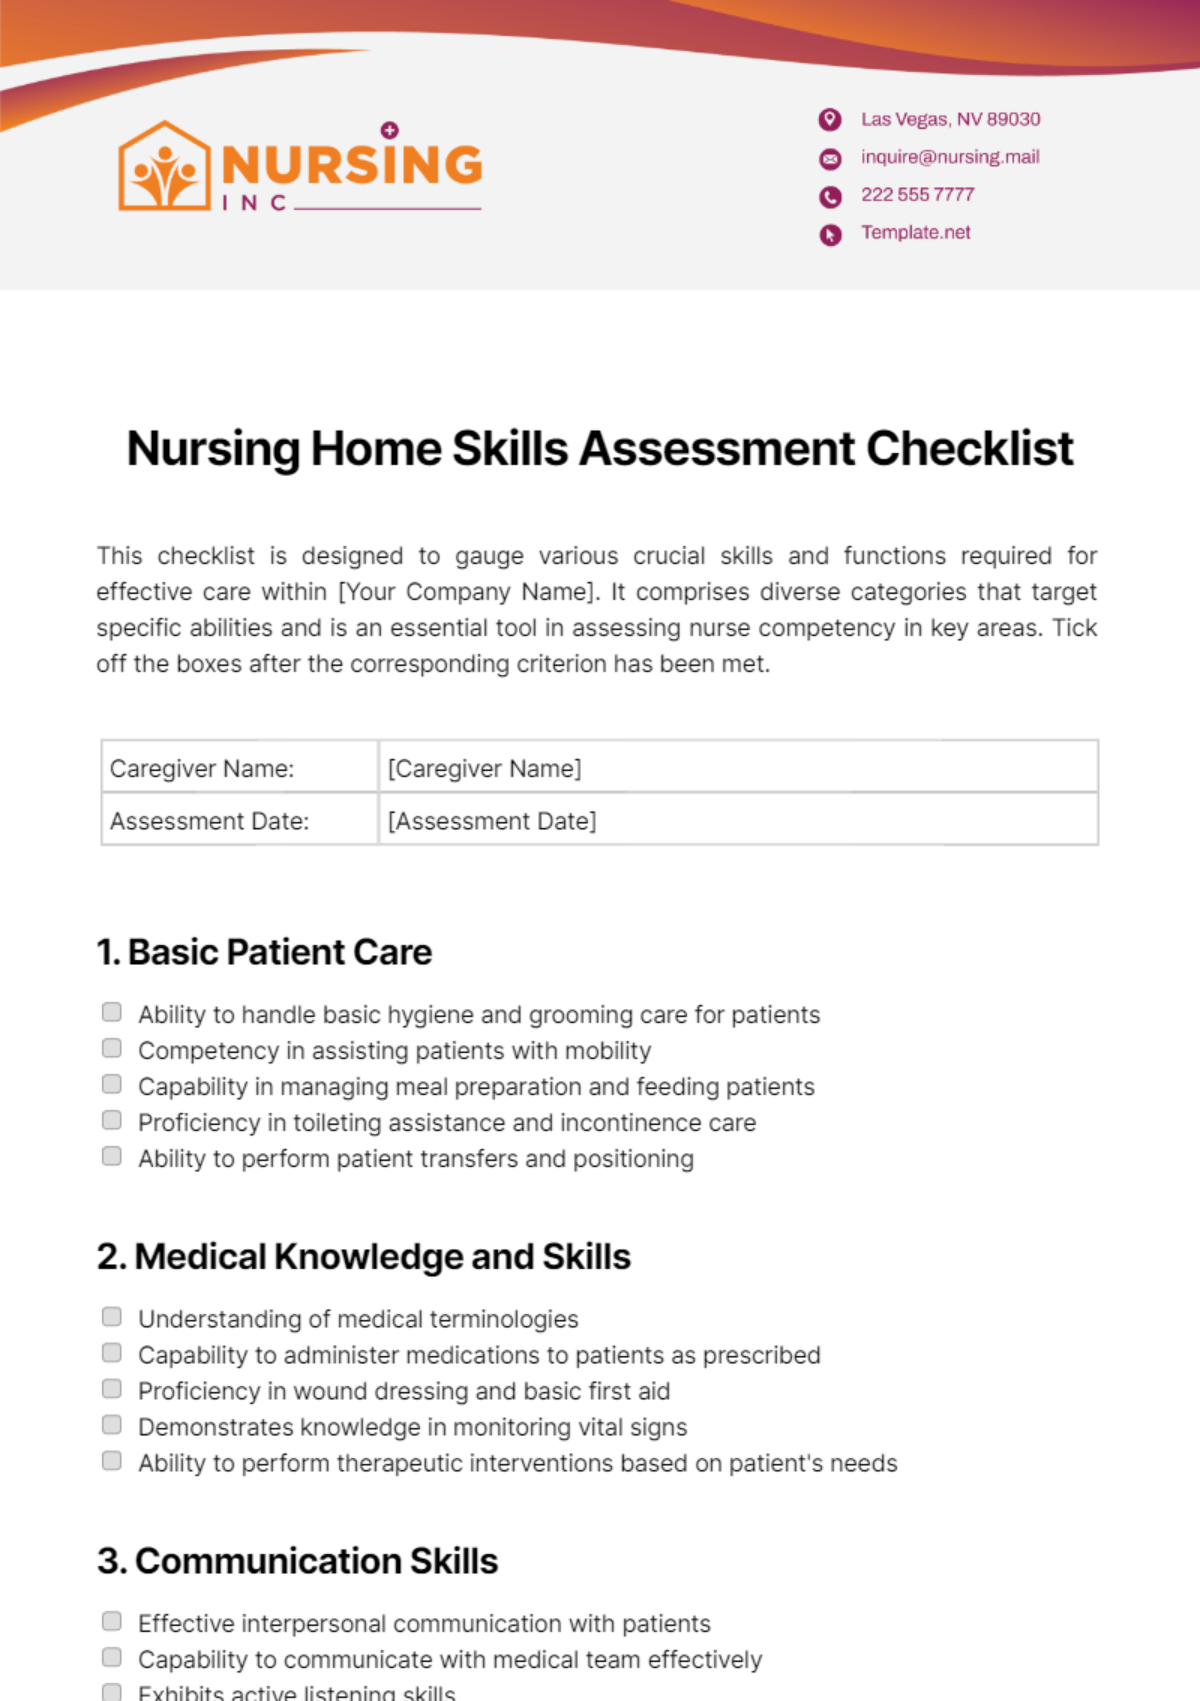 Nursing Home Skills Assessment Checklist Template